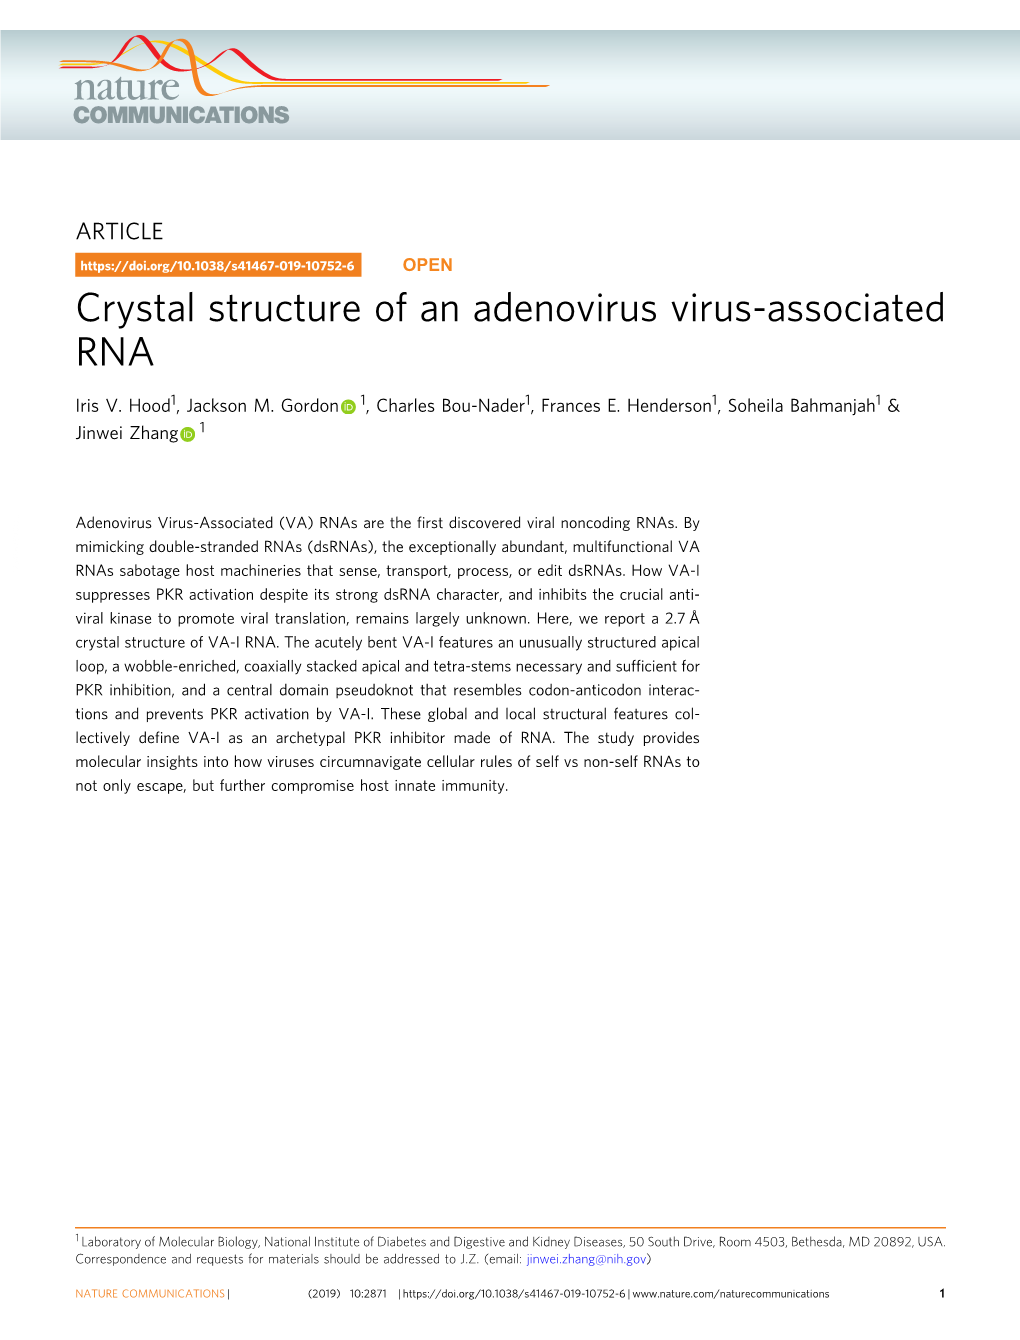 Crystal Structure of an Adenovirus Virus-Associated RNA